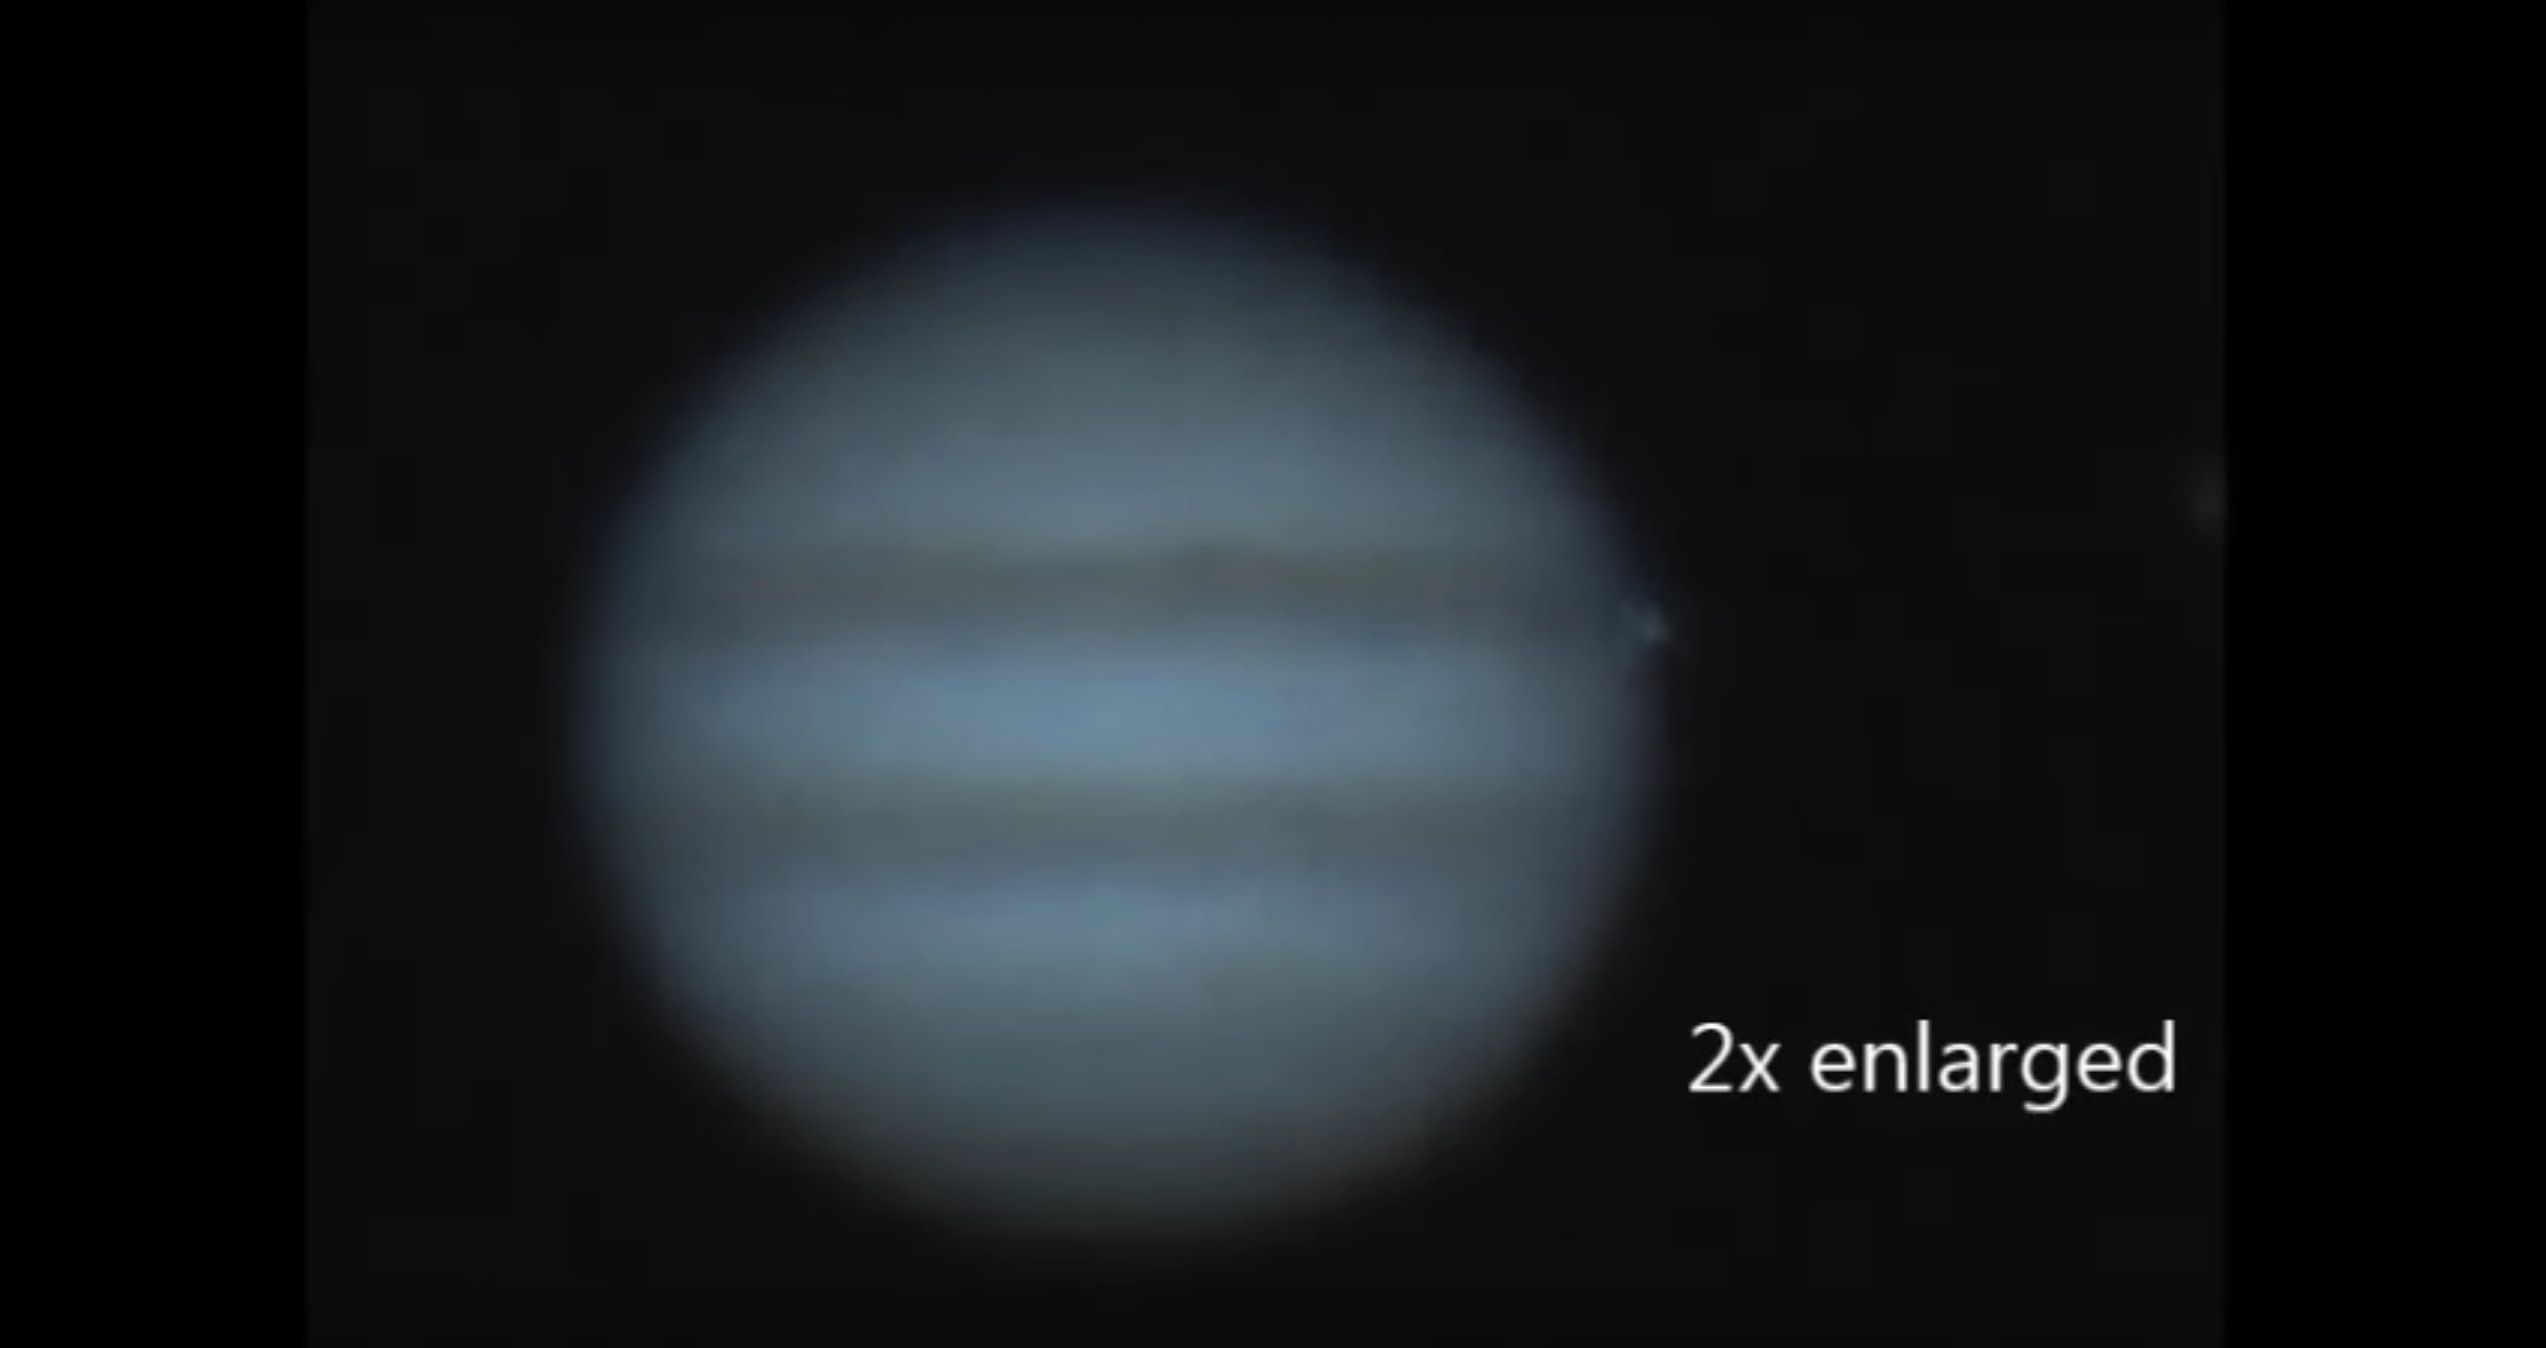 Amateur Astronomer Captures Mystery Object Hitting Jupiter